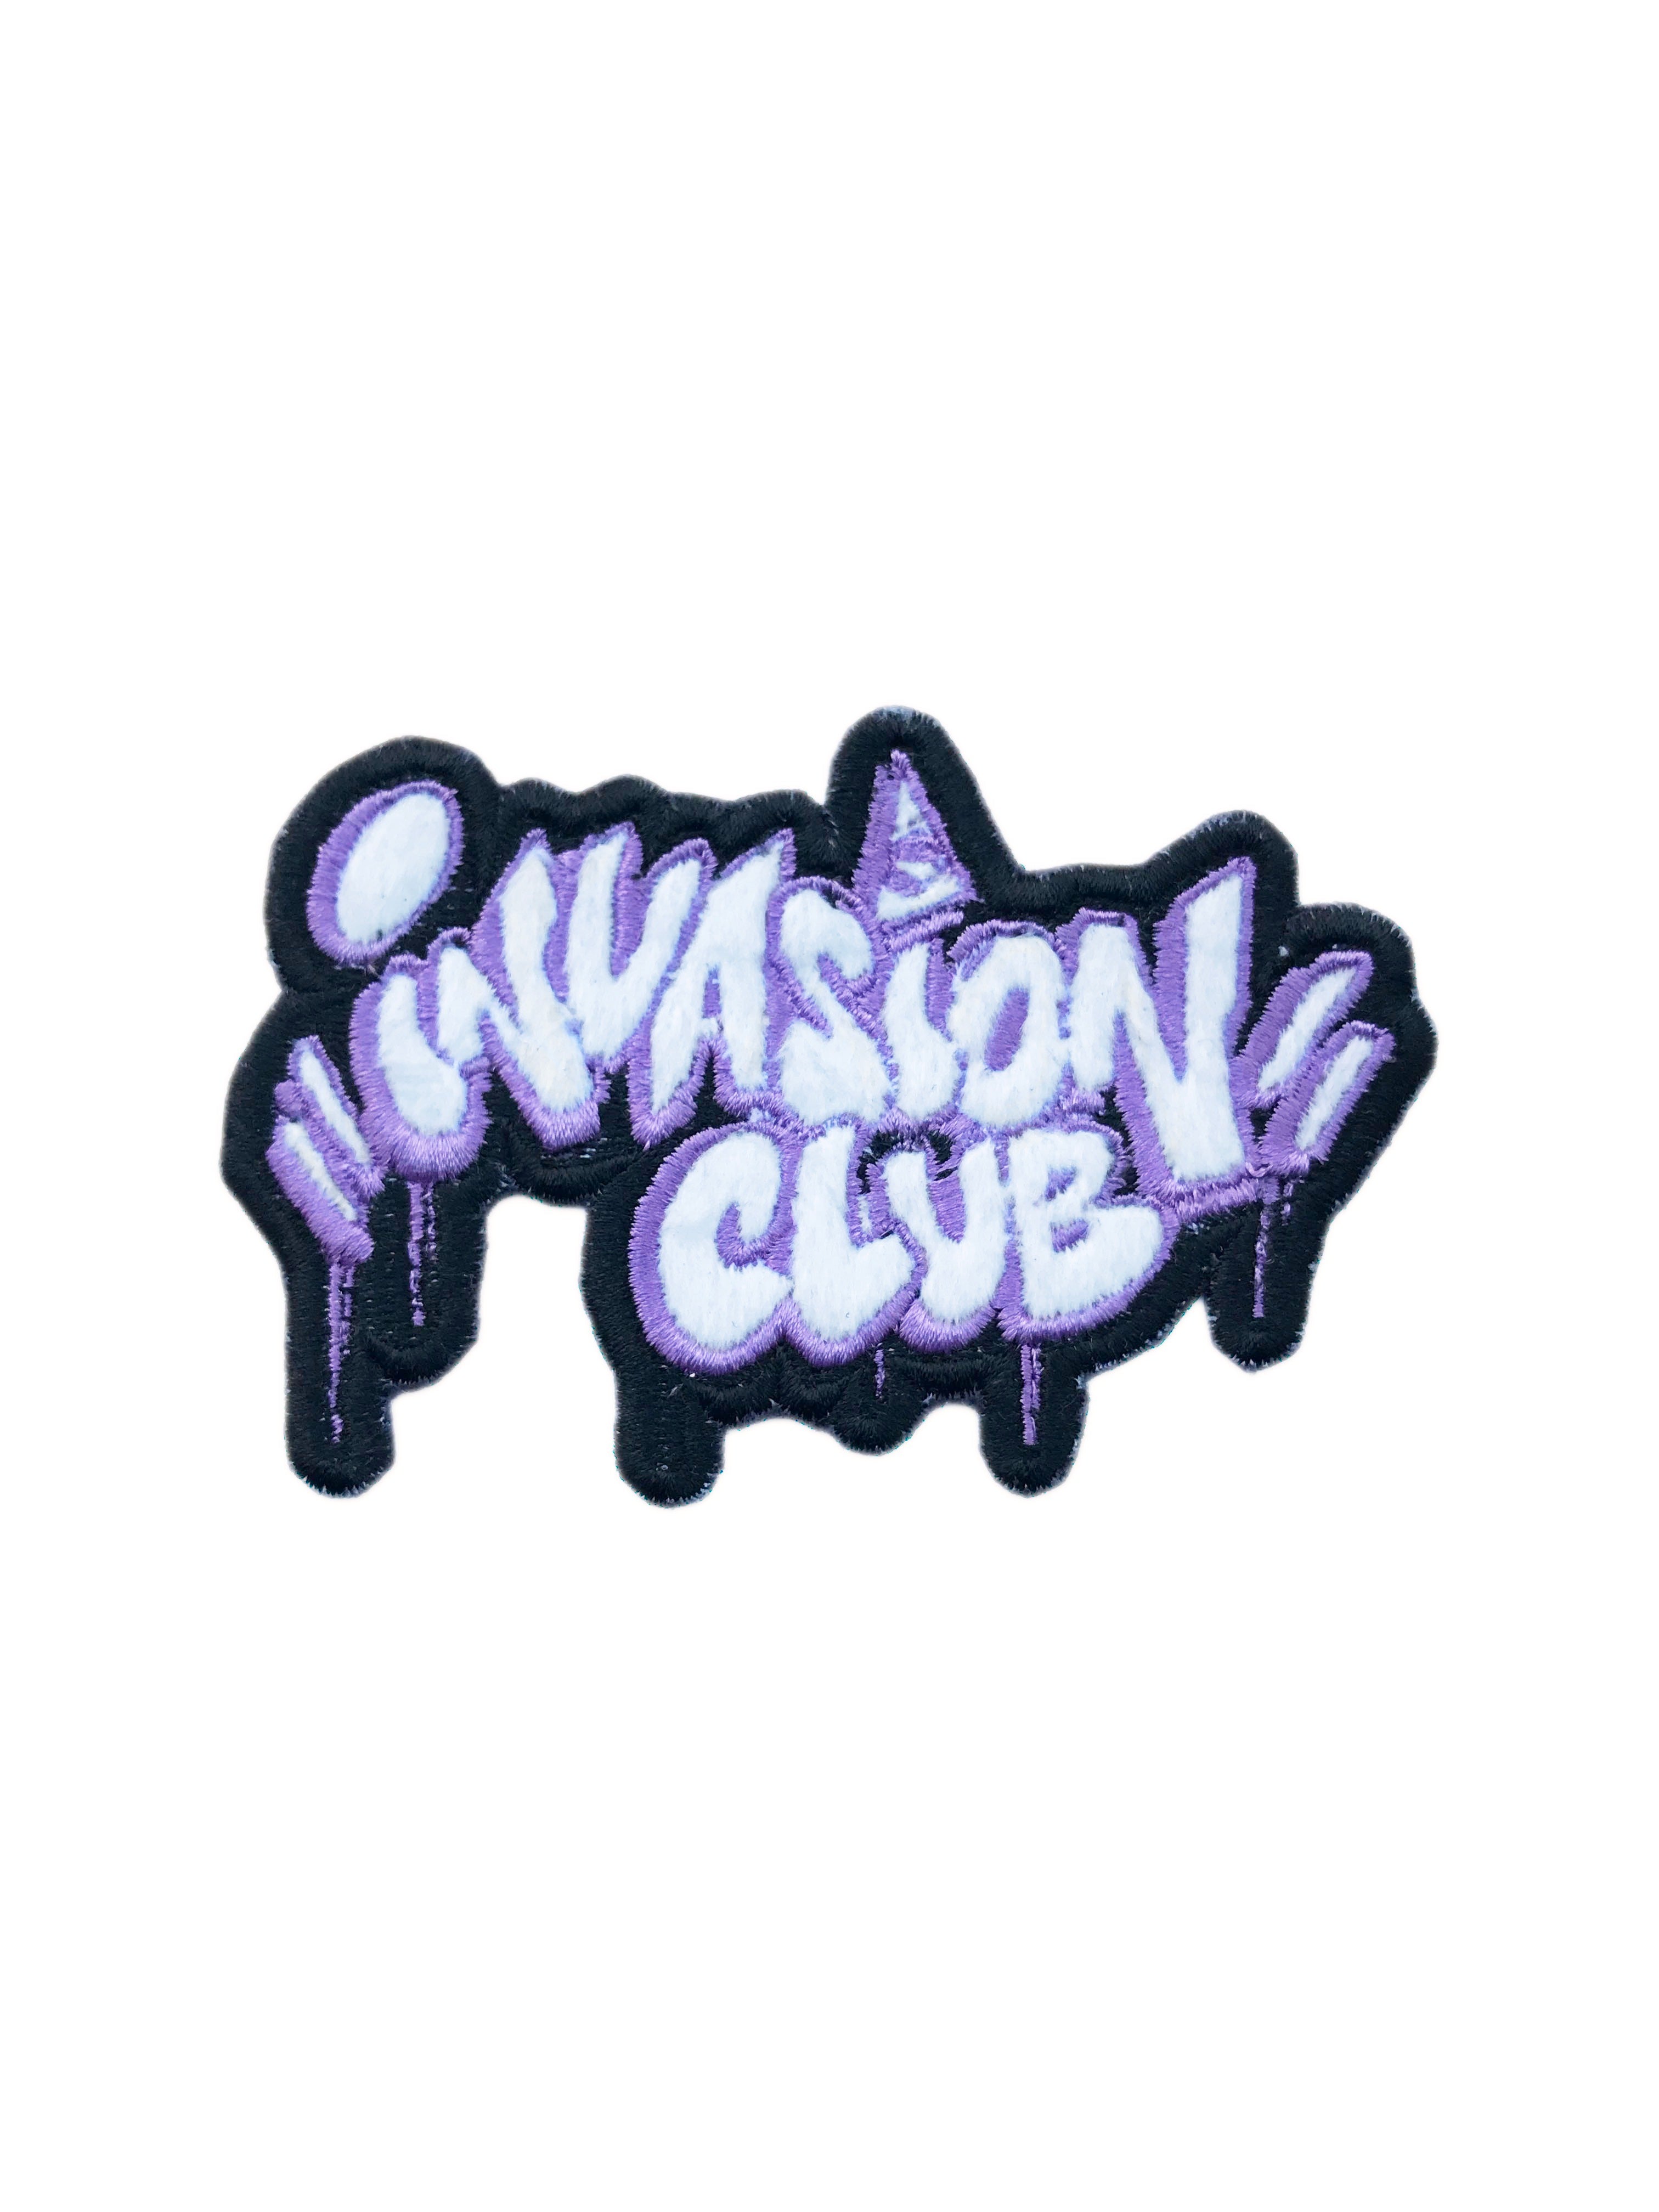 Puffy Purple Invasion Club Patch